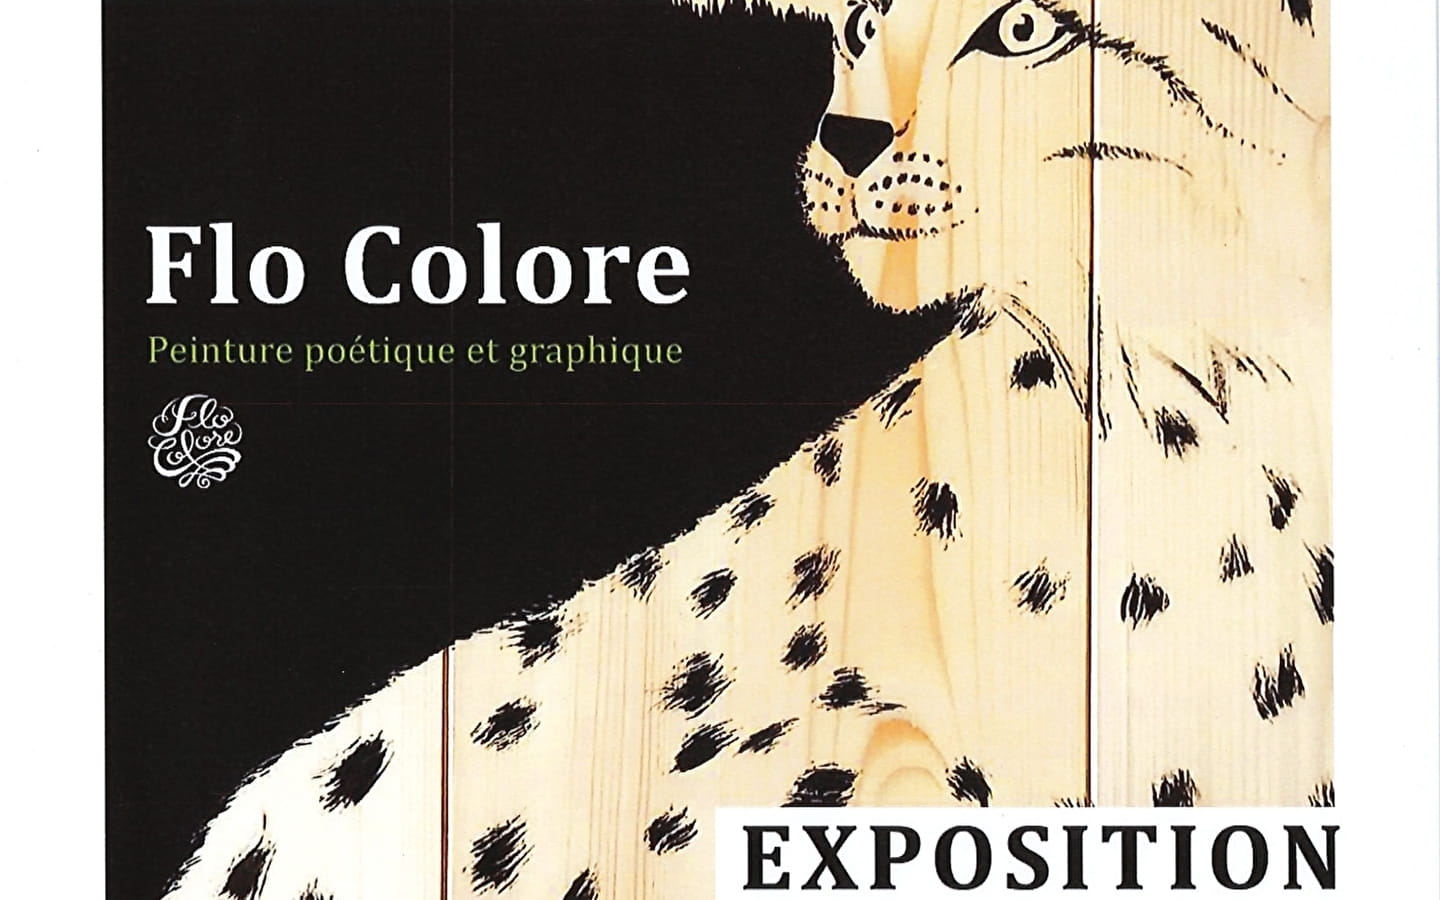 Tentoonstelling: Flo Colore, poëtische en grafische schilderkunst.